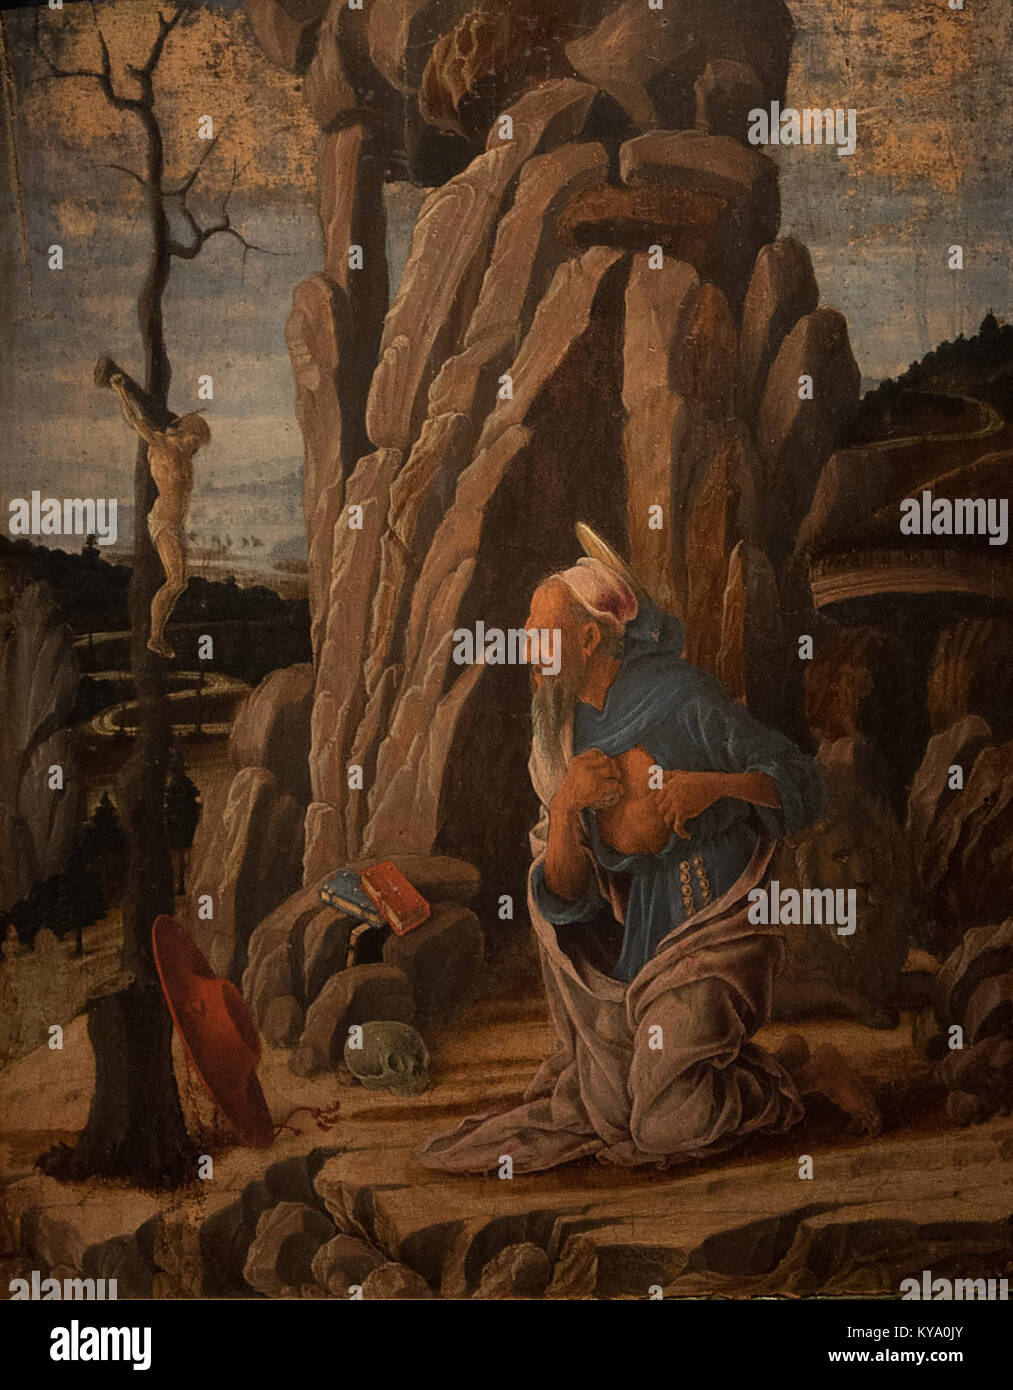 Marco Zoppo (1433-1478) - De Boetvaardige Hiëronymus (1470) - Bologna Pinacoteca Nazionale - 26-04-2012 9-18-30 Stock Photo